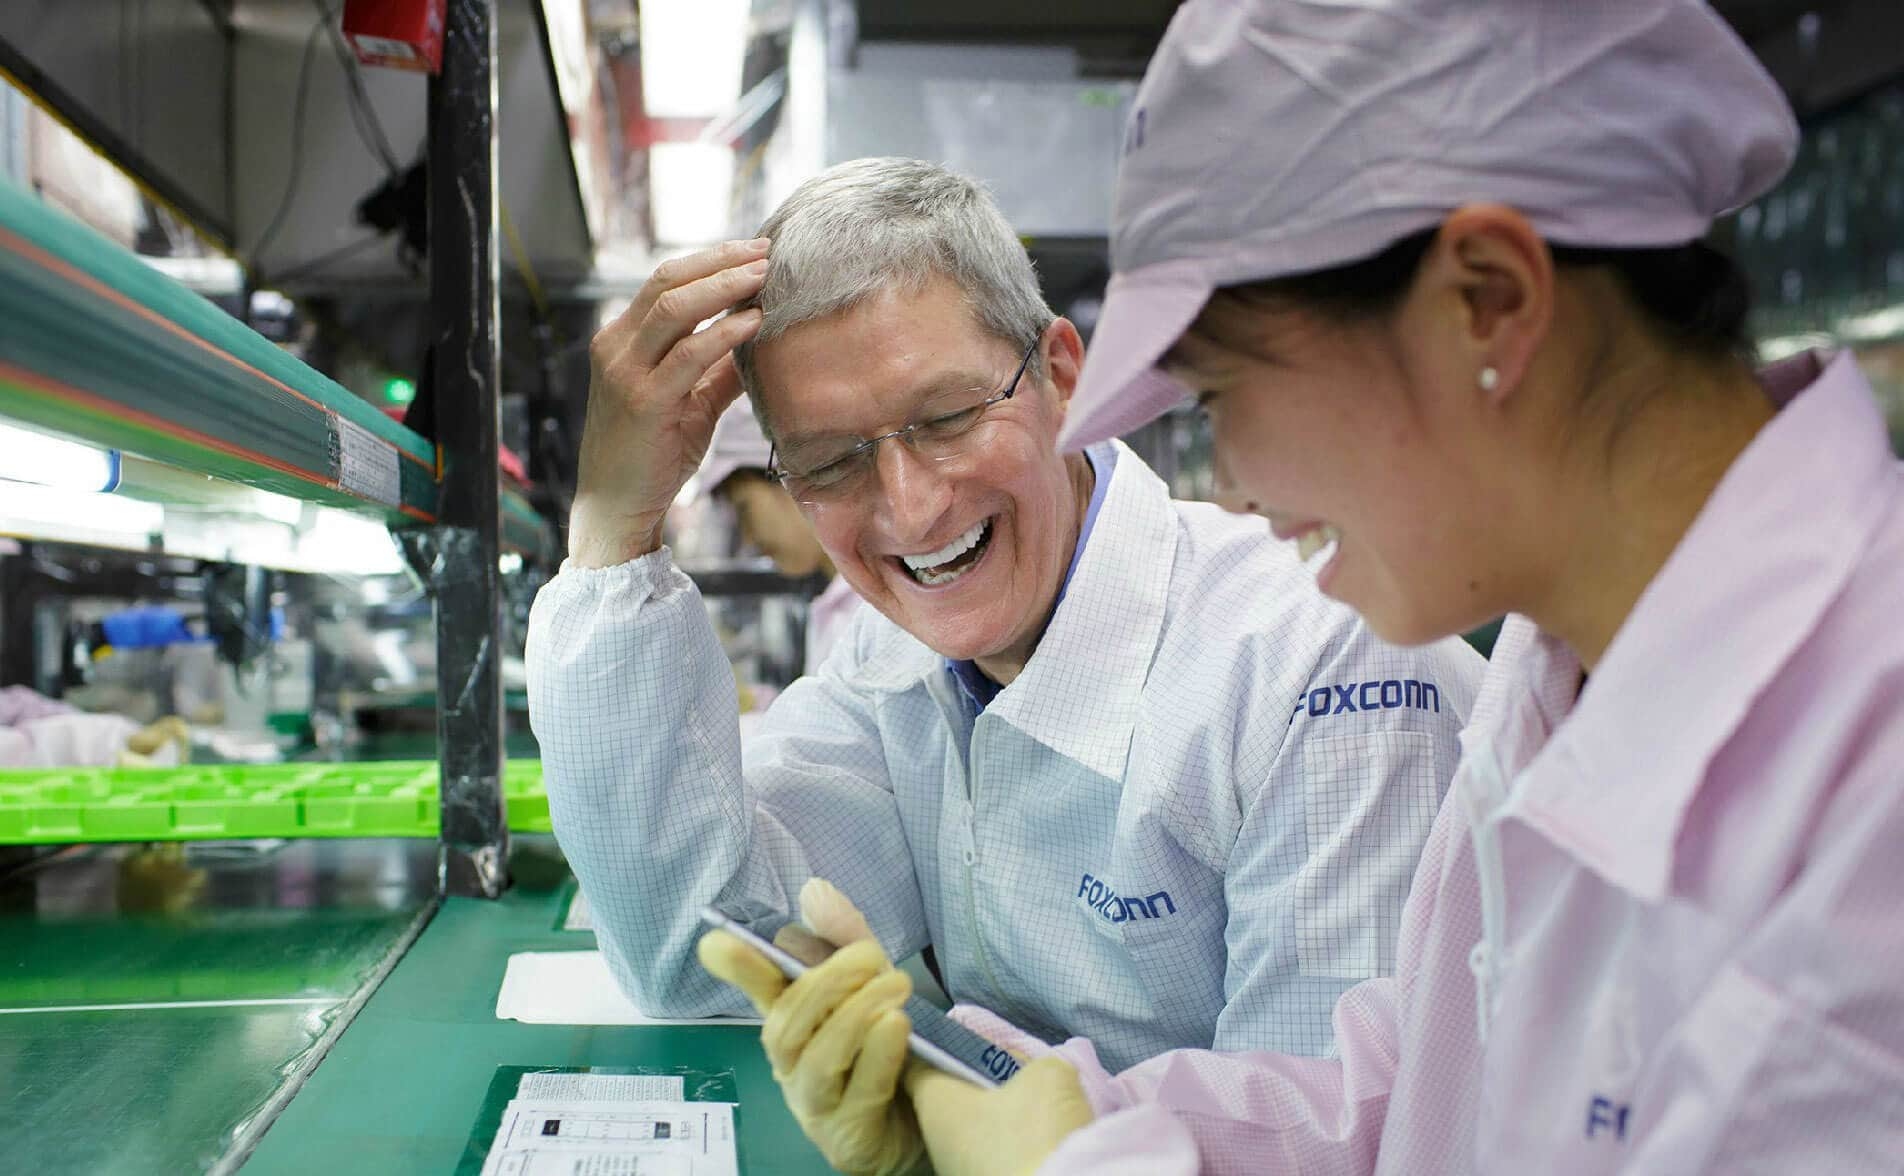 Apple CEO Visiting Foxcon Factory